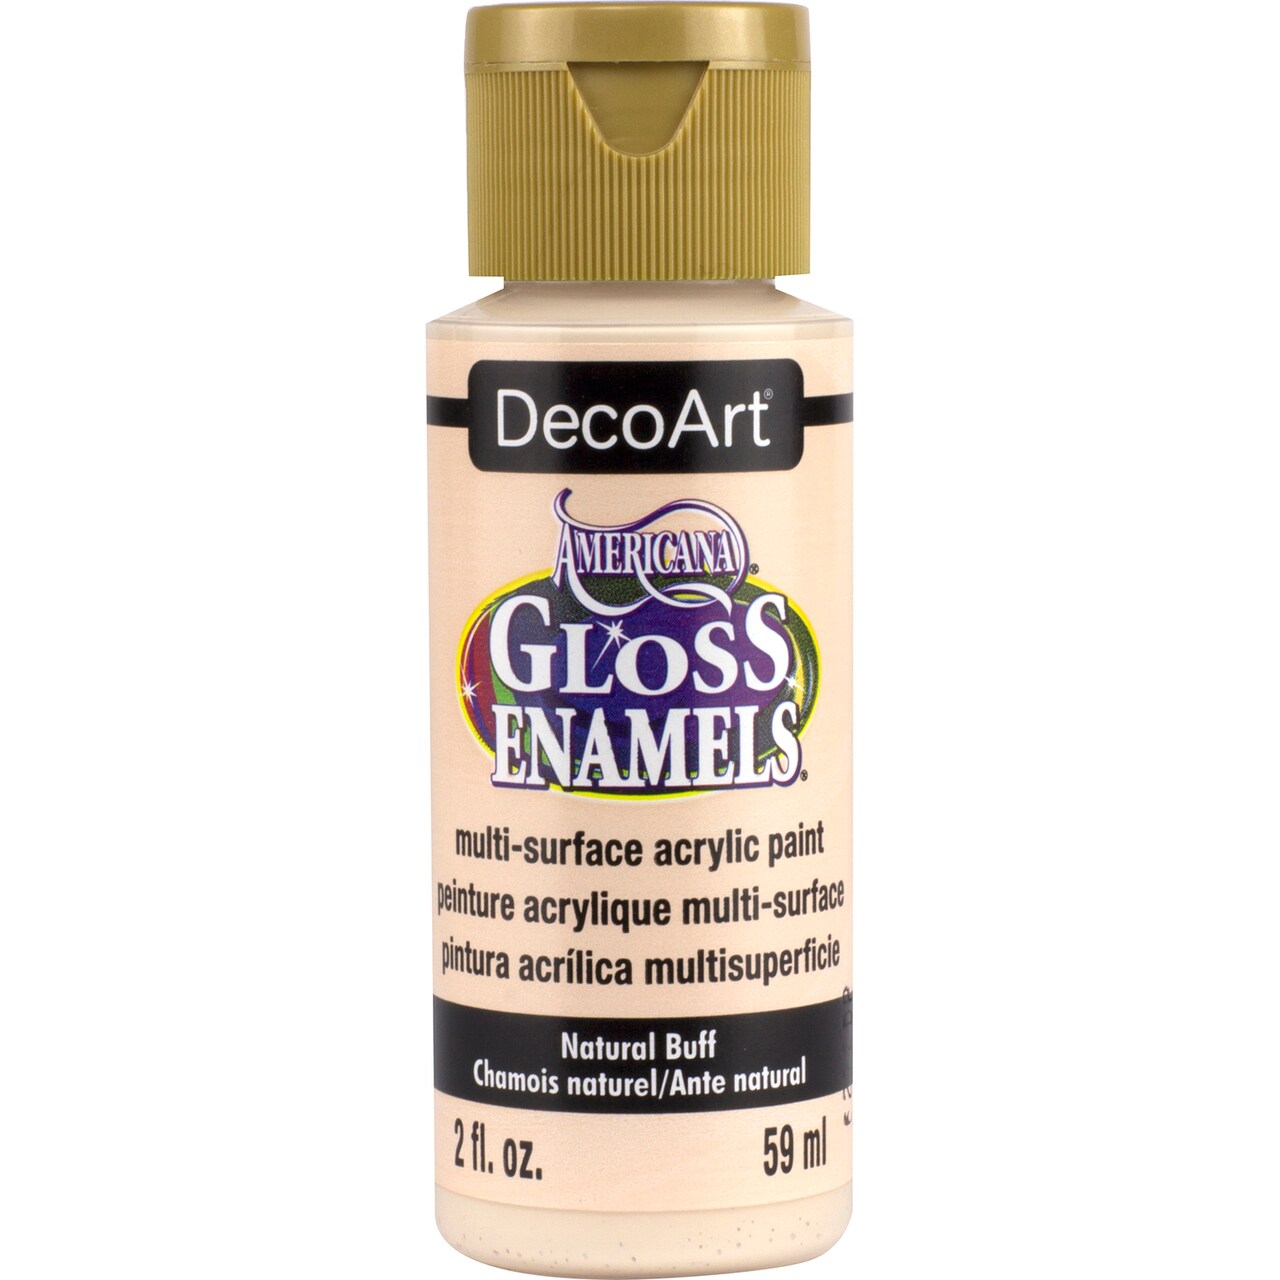 DecoArt Americana Gloss Enamels Acrylic Paint, 2 oz., Neutral Buff